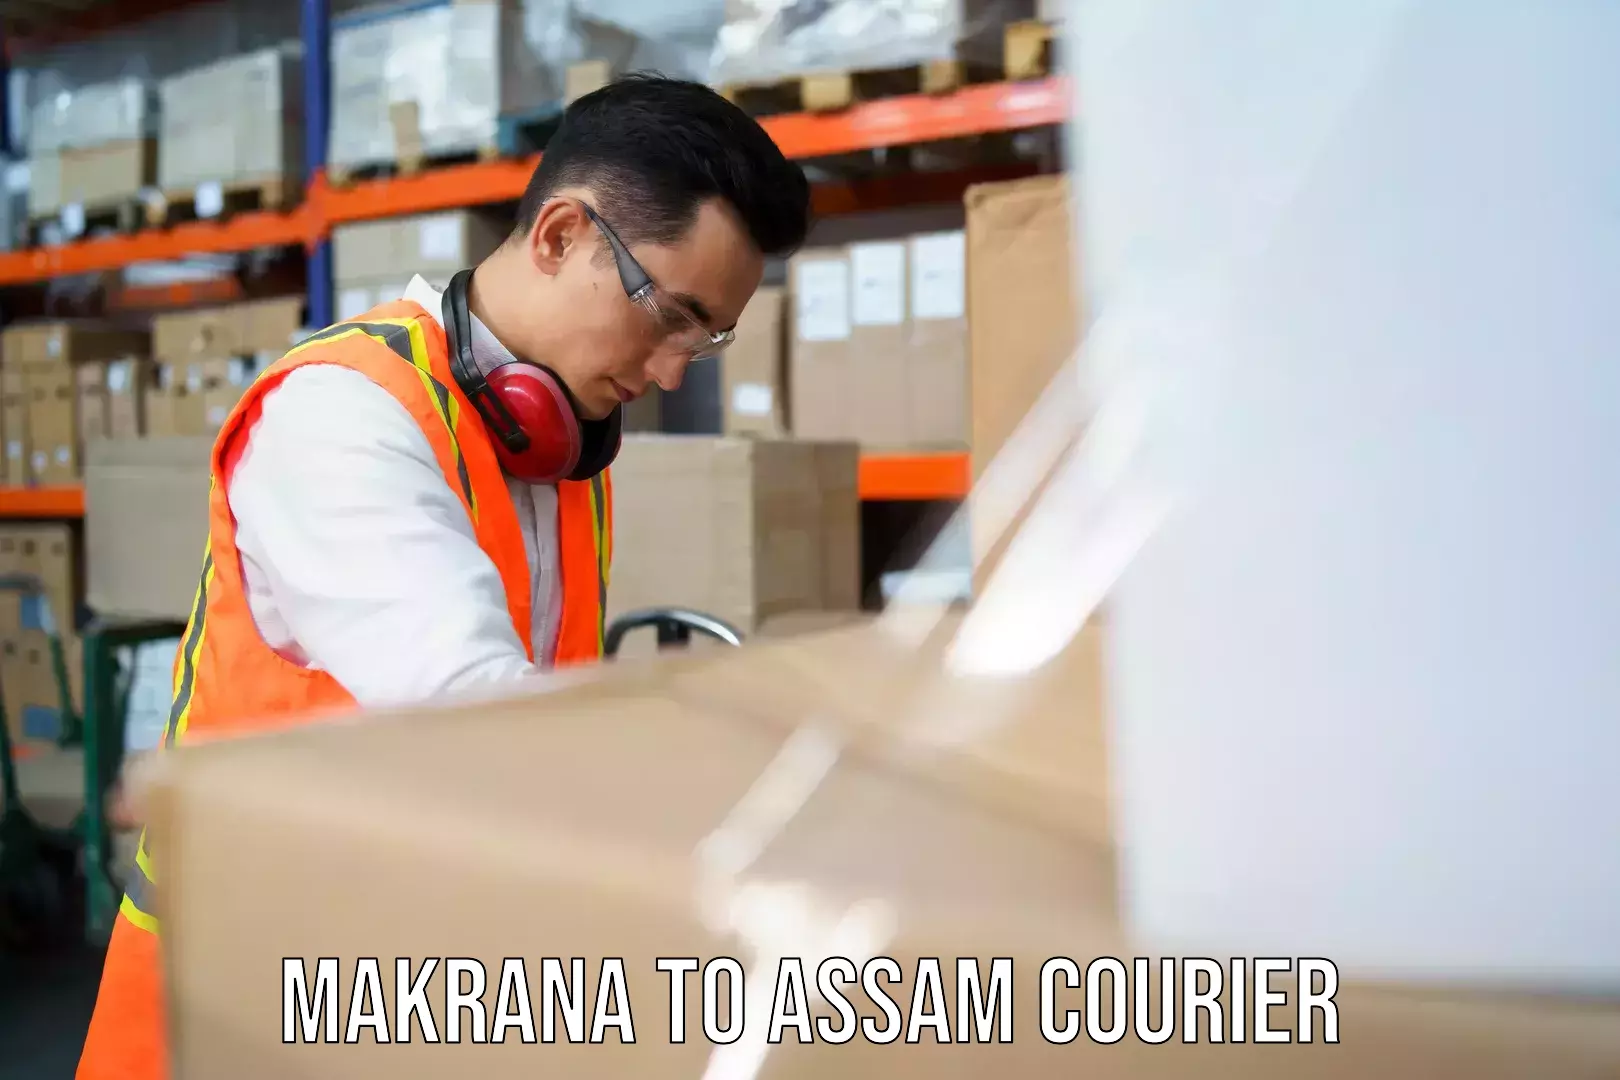 Courier service comparison in Makrana to Dhubri